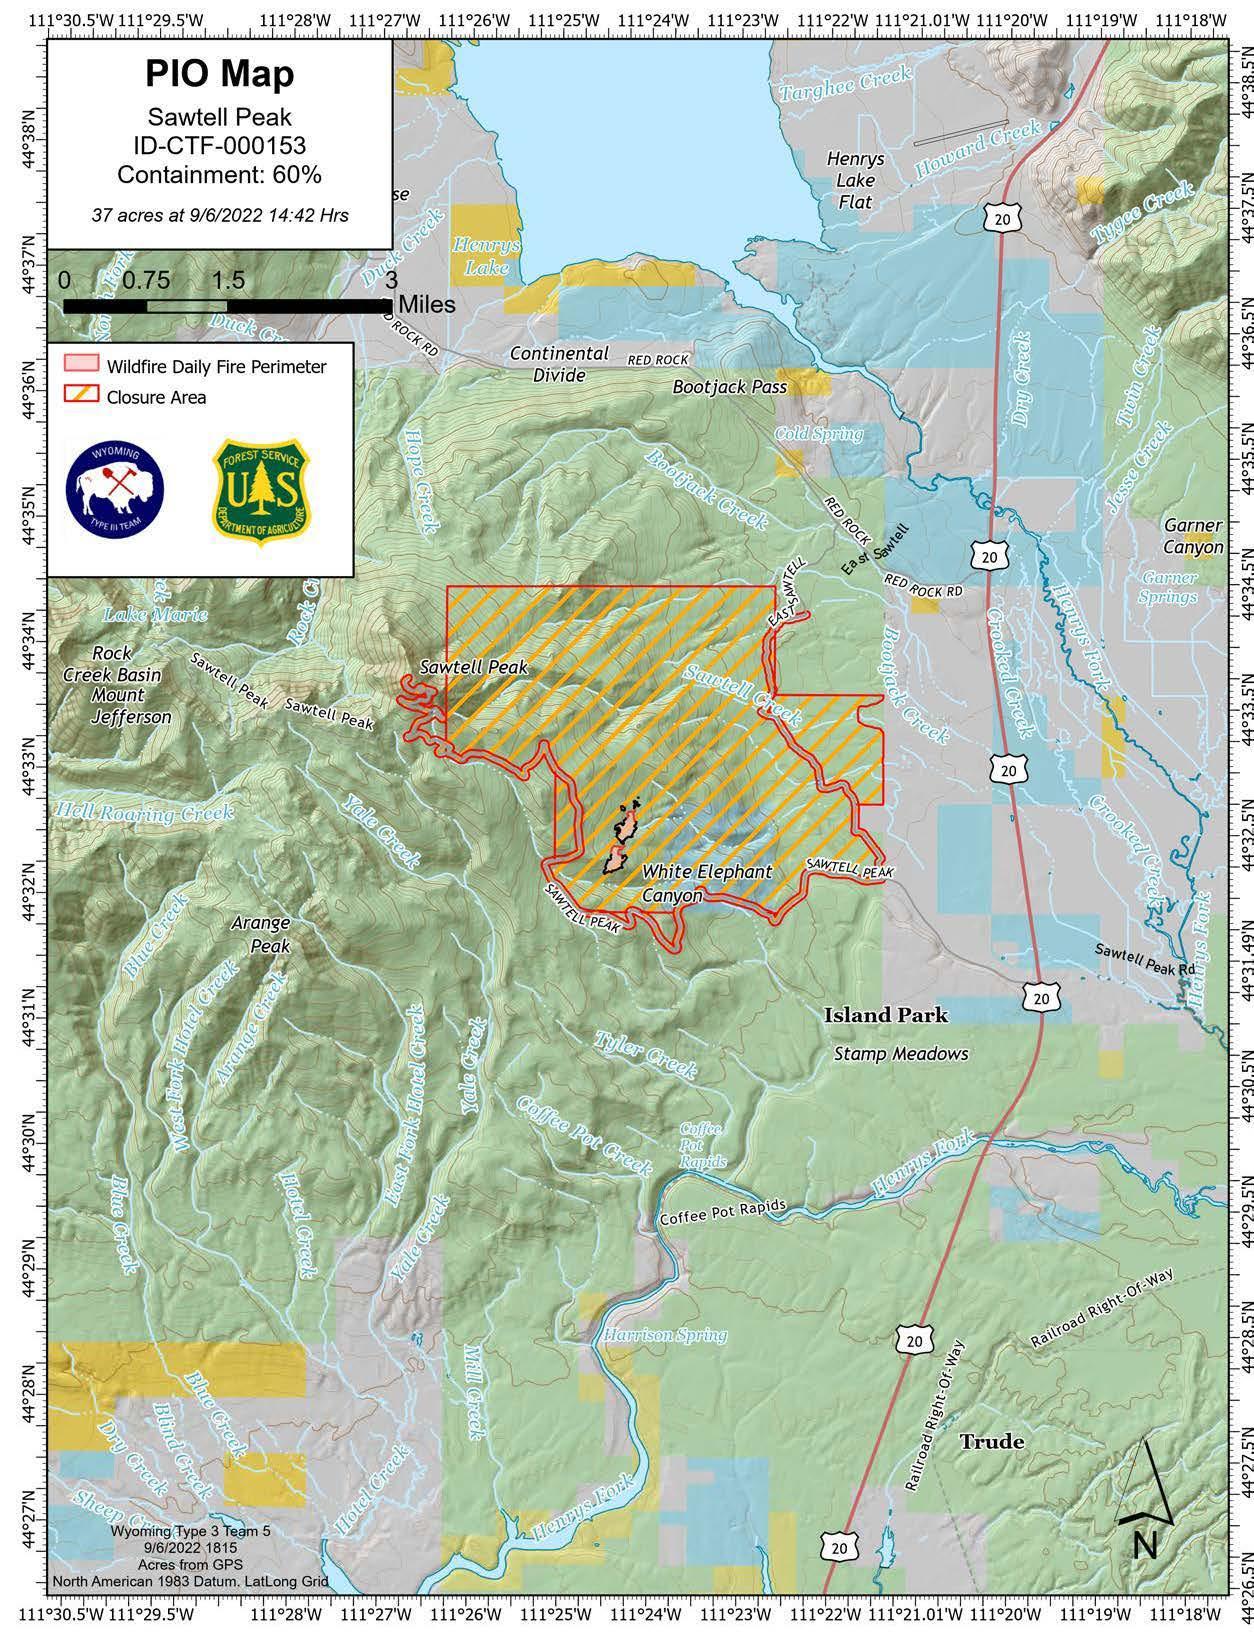 Sawtell Peak Public Information Map 9.7.2022